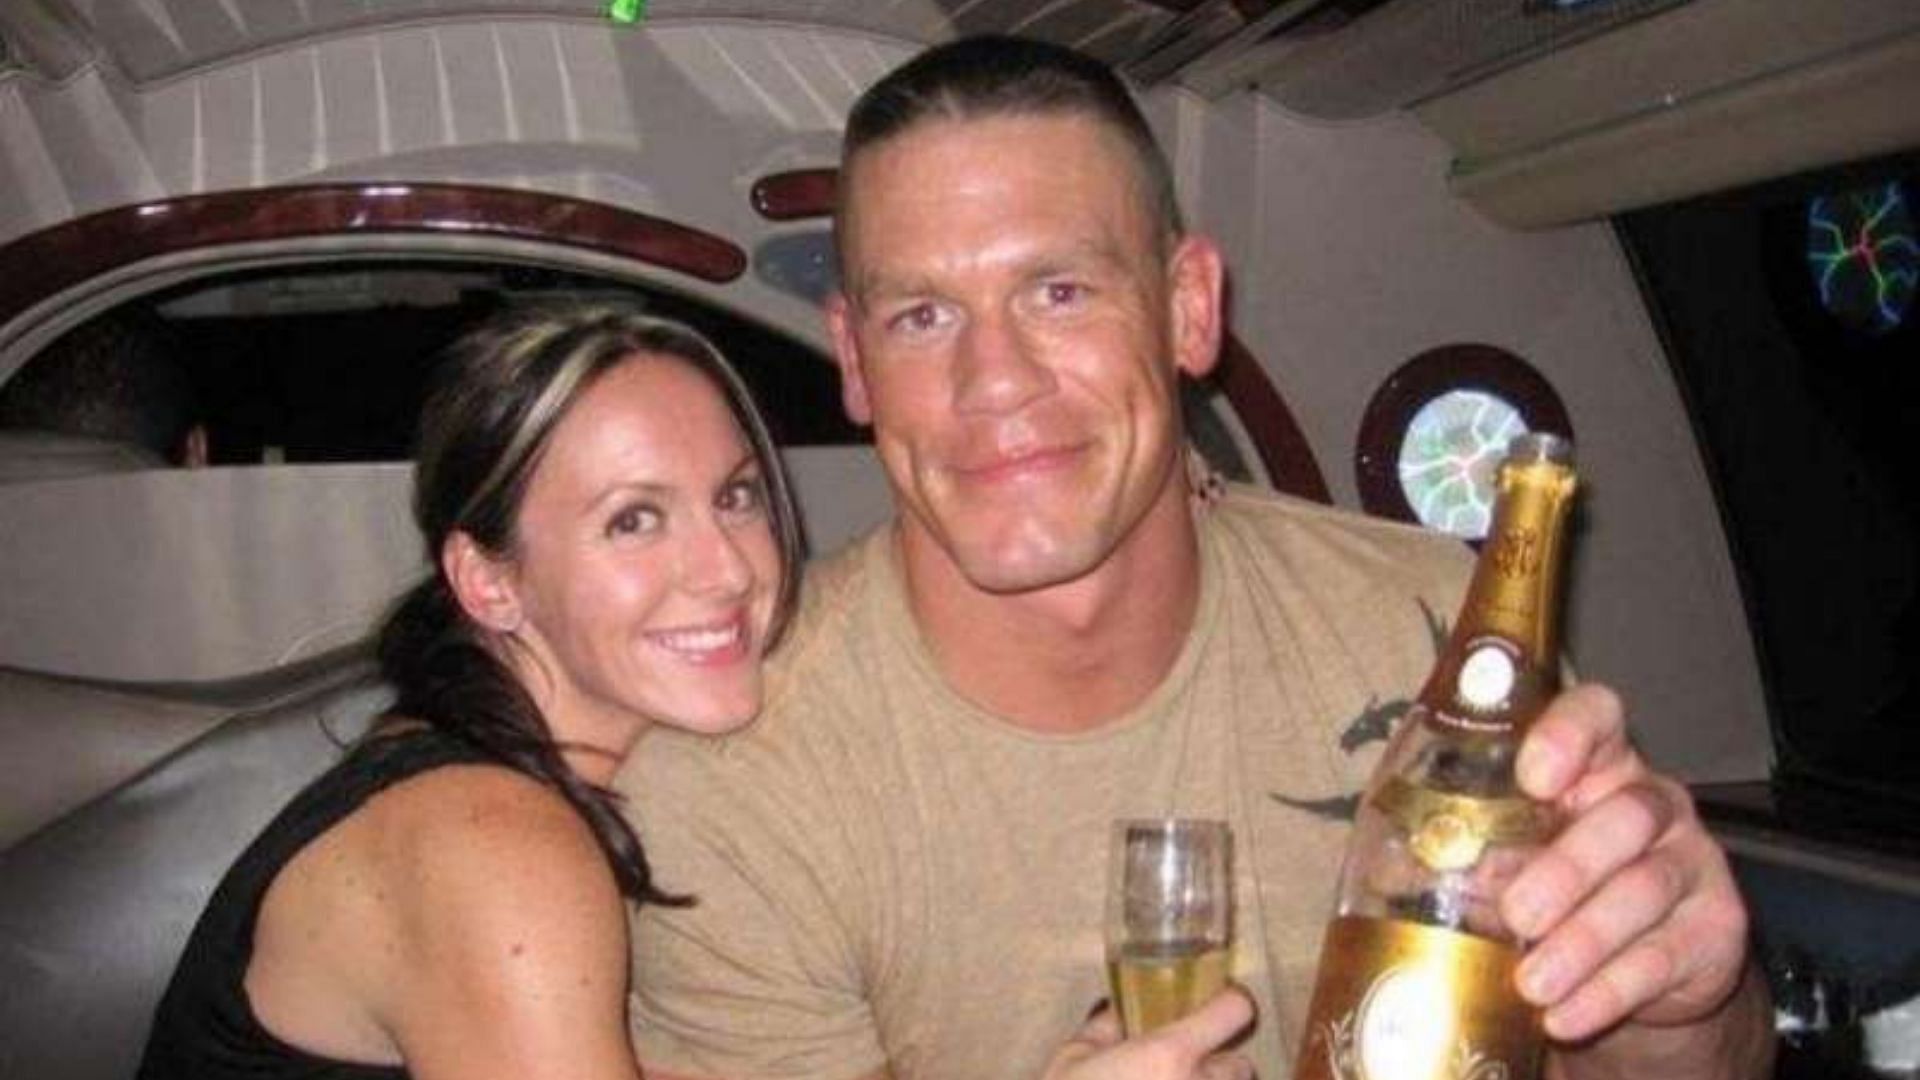 John Cena with Elizabeth Huberdeau